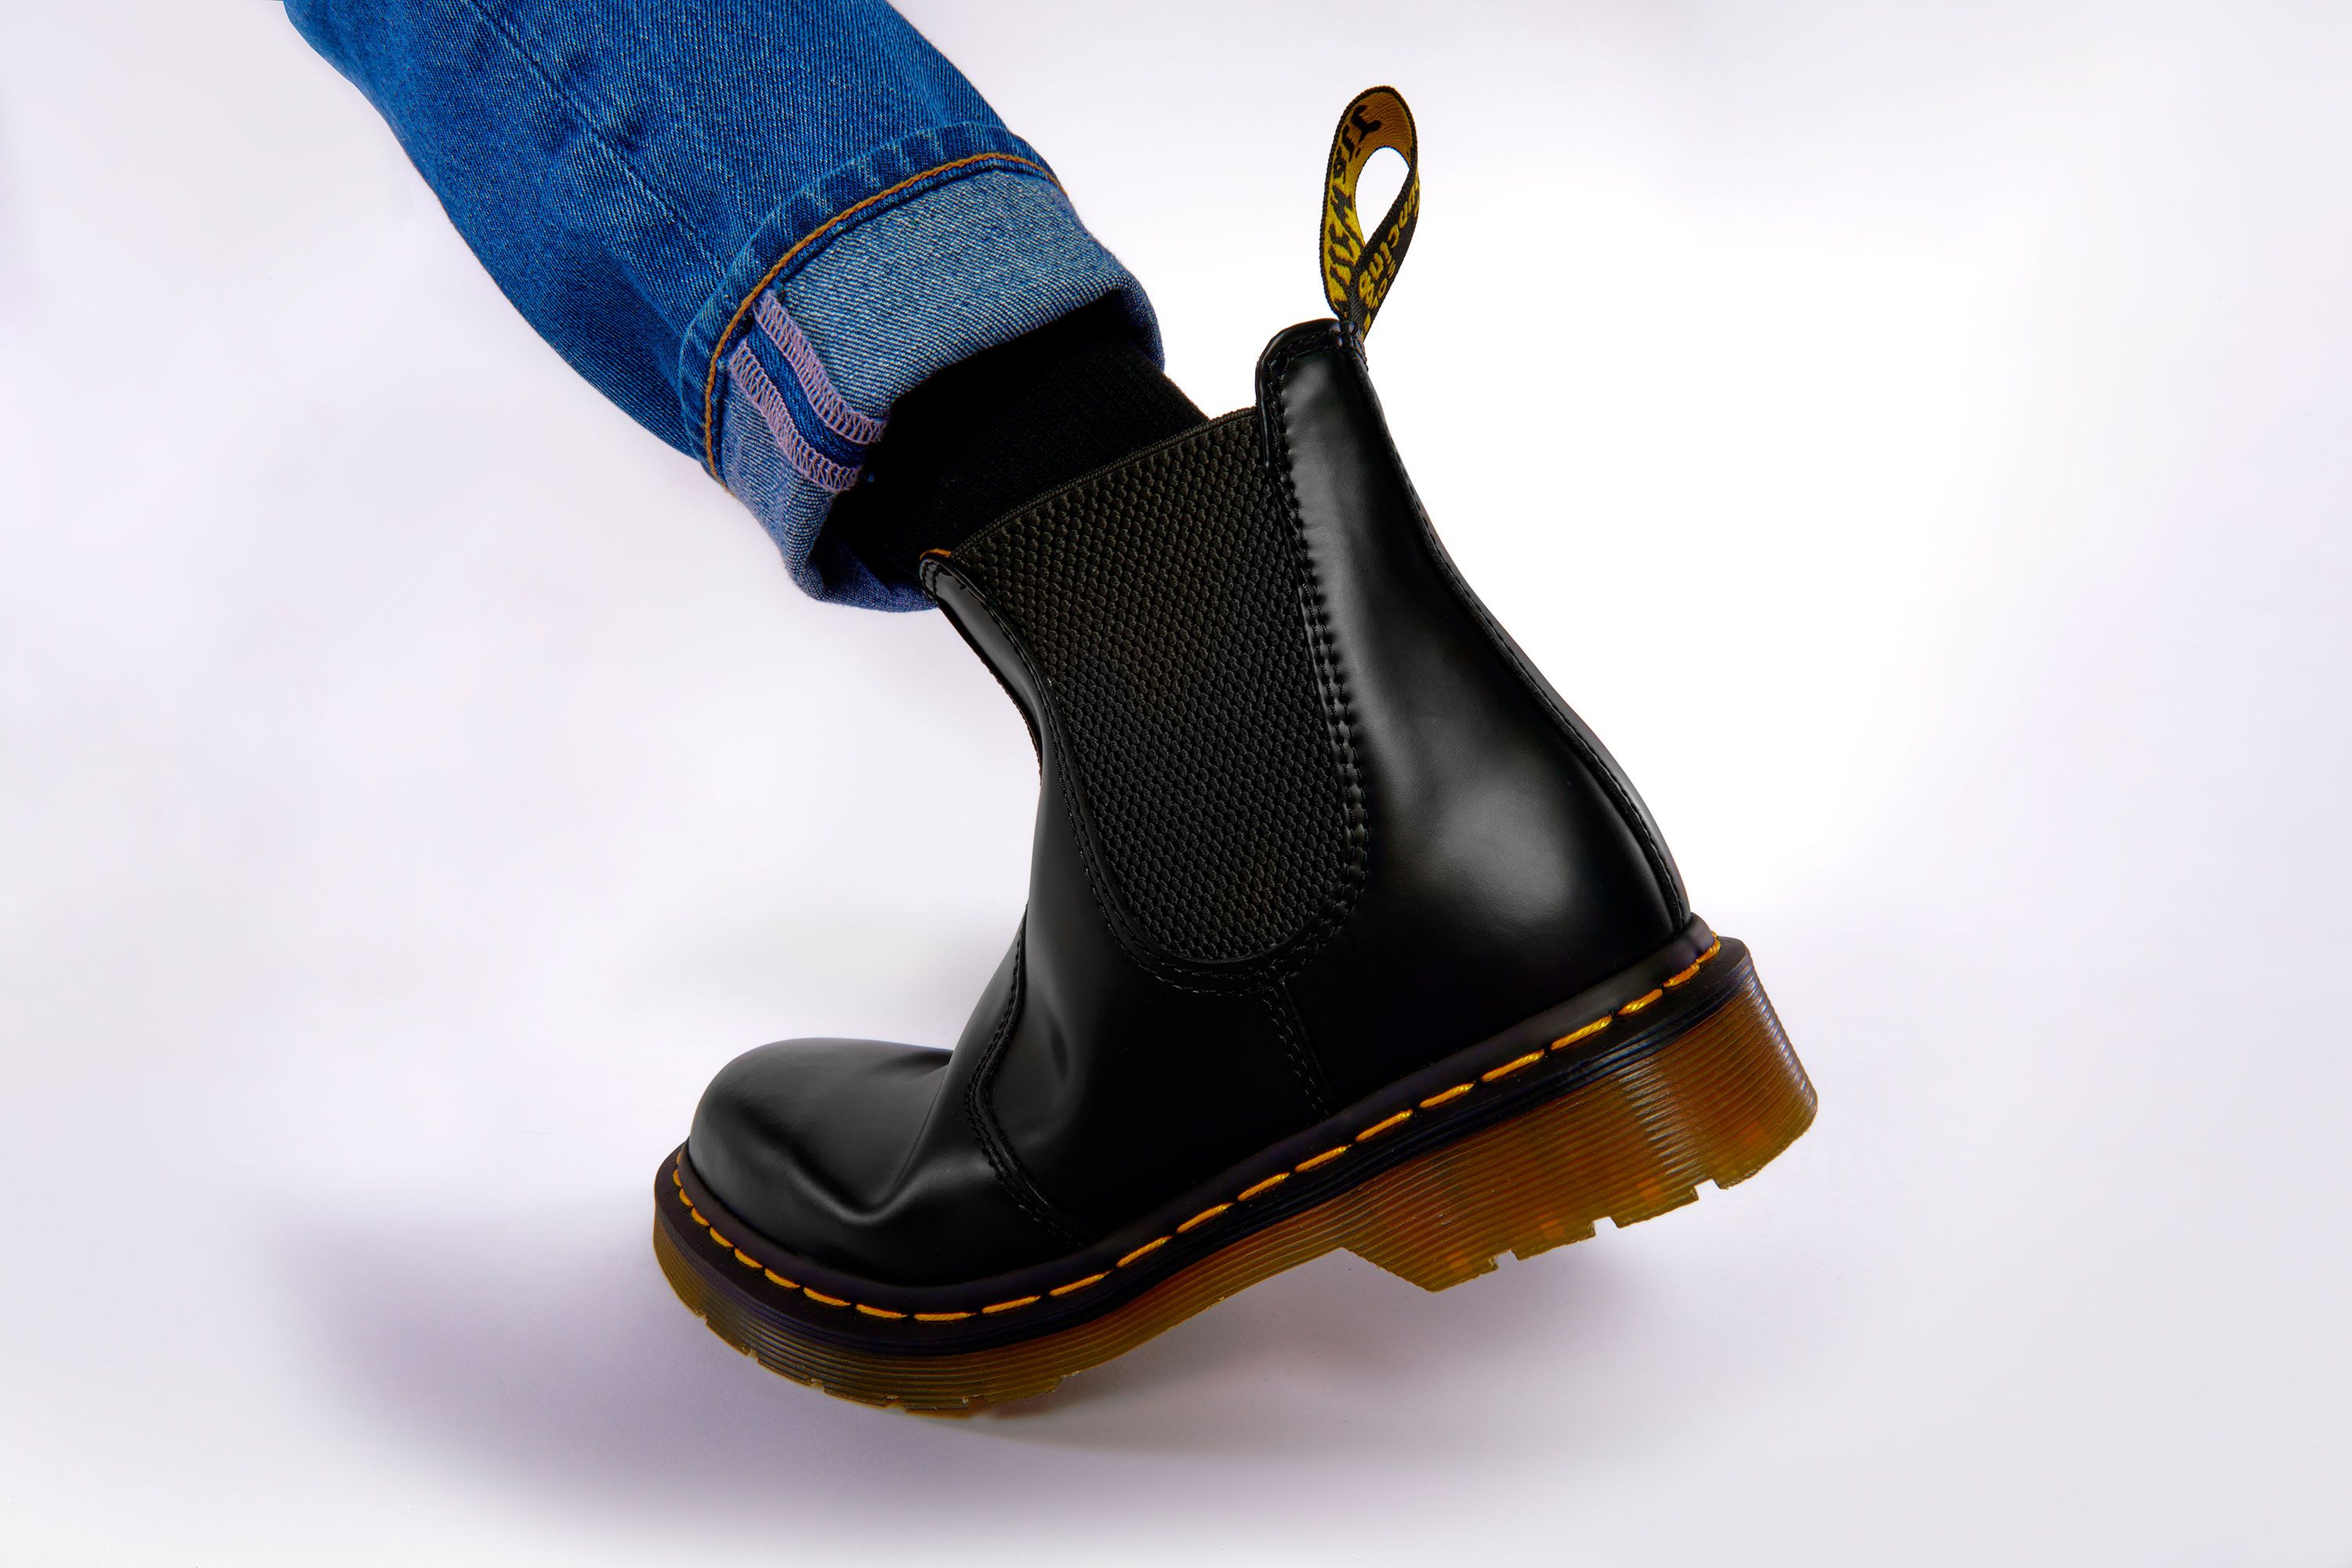 How to Rock Chunky Black Boots Like a Fashion Pro